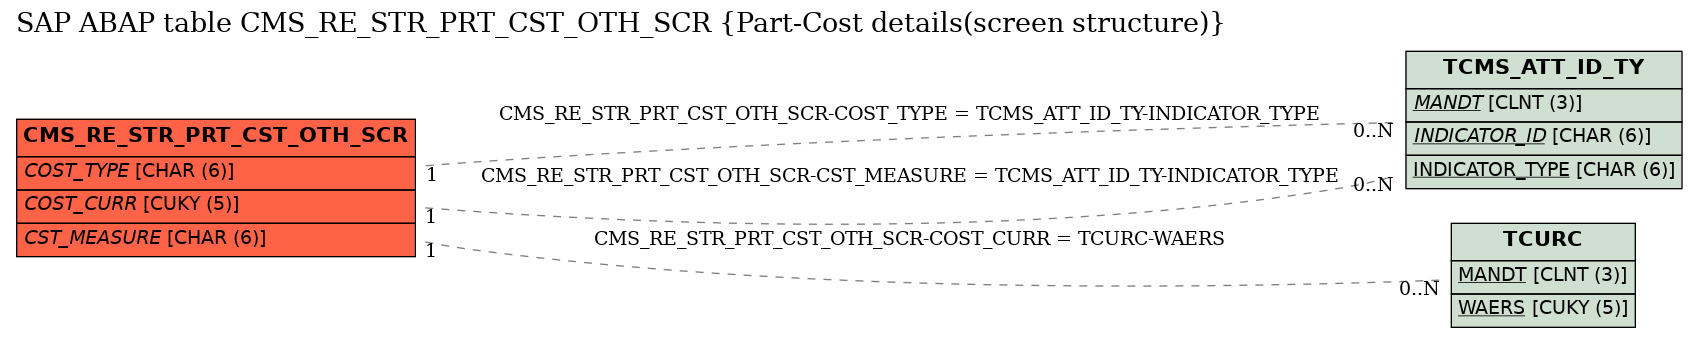 E-R Diagram for table CMS_RE_STR_PRT_CST_OTH_SCR (Part-Cost details(screen structure))